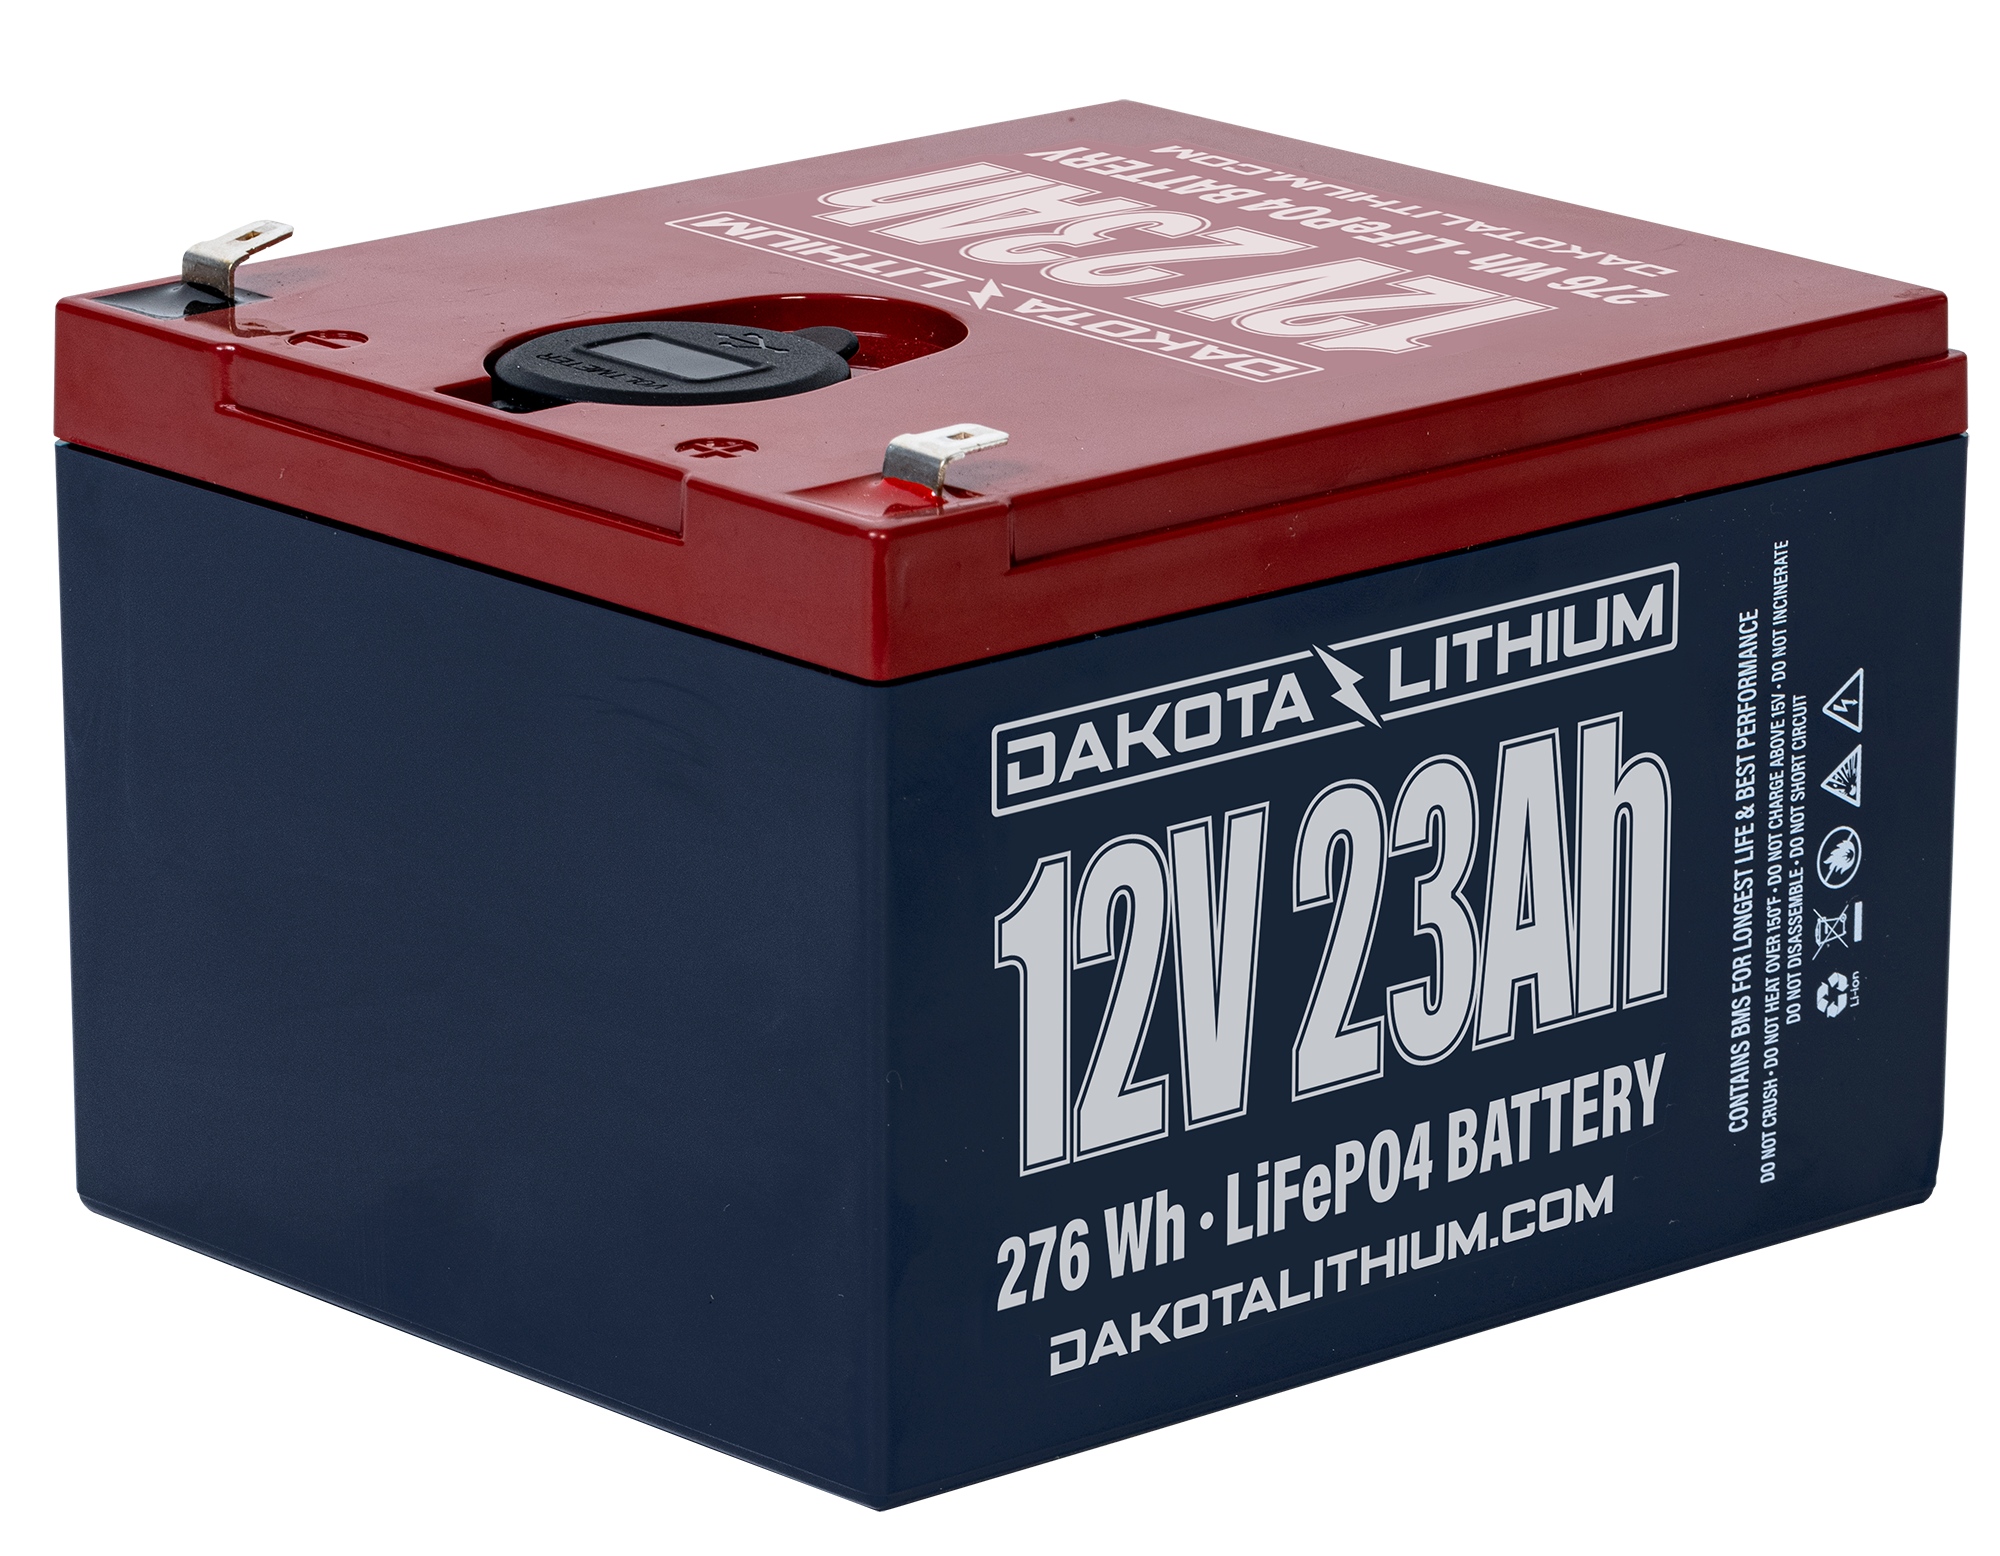 Dakota Lithium 12V 23Ah Battery With Dual USB Ports & Voltmeter